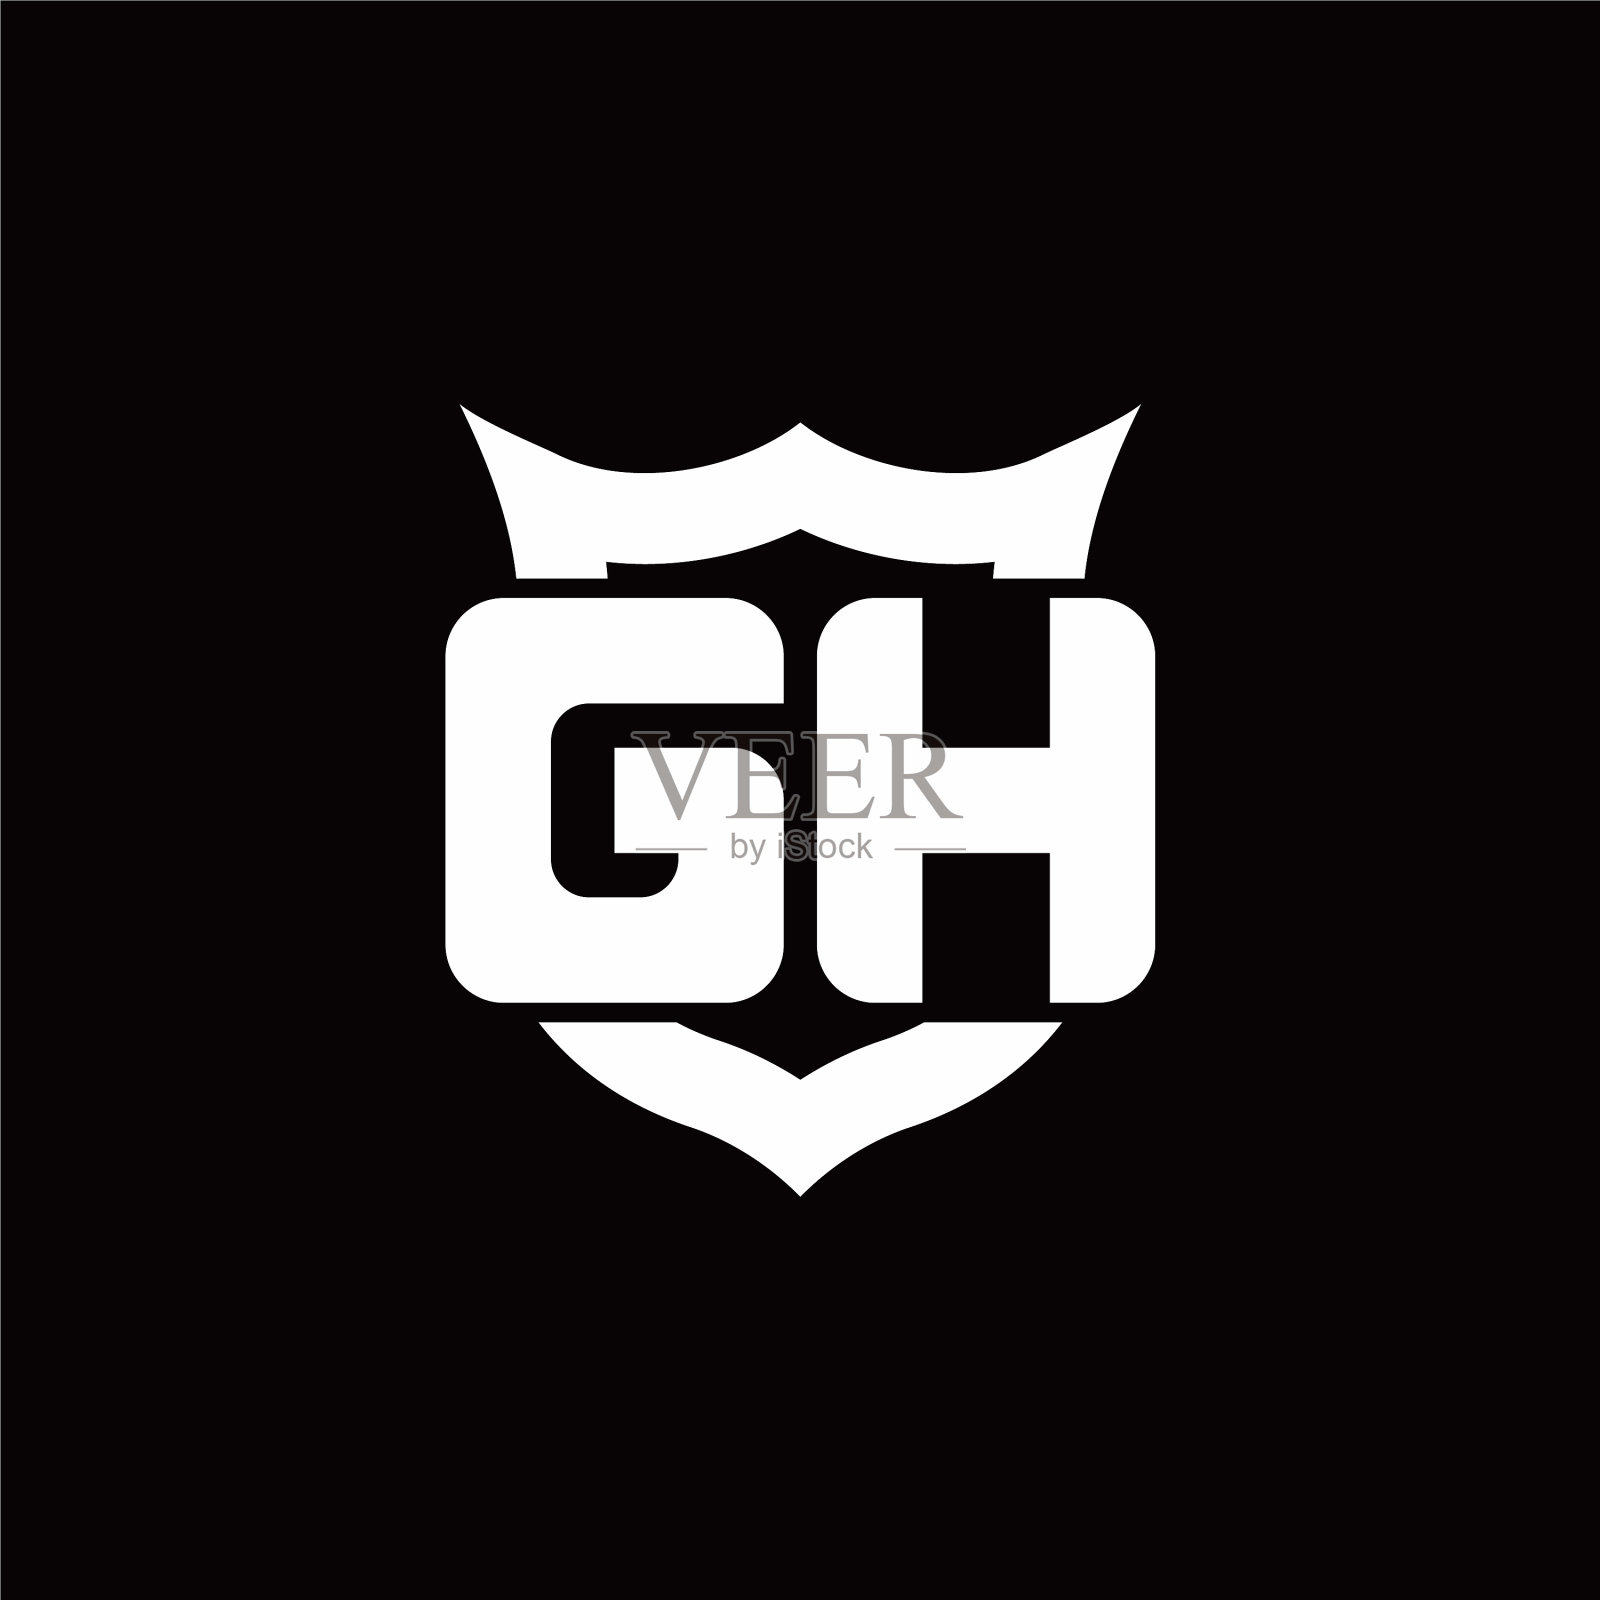 Gh标志与盾牌围绕皇冠形状插画图片素材